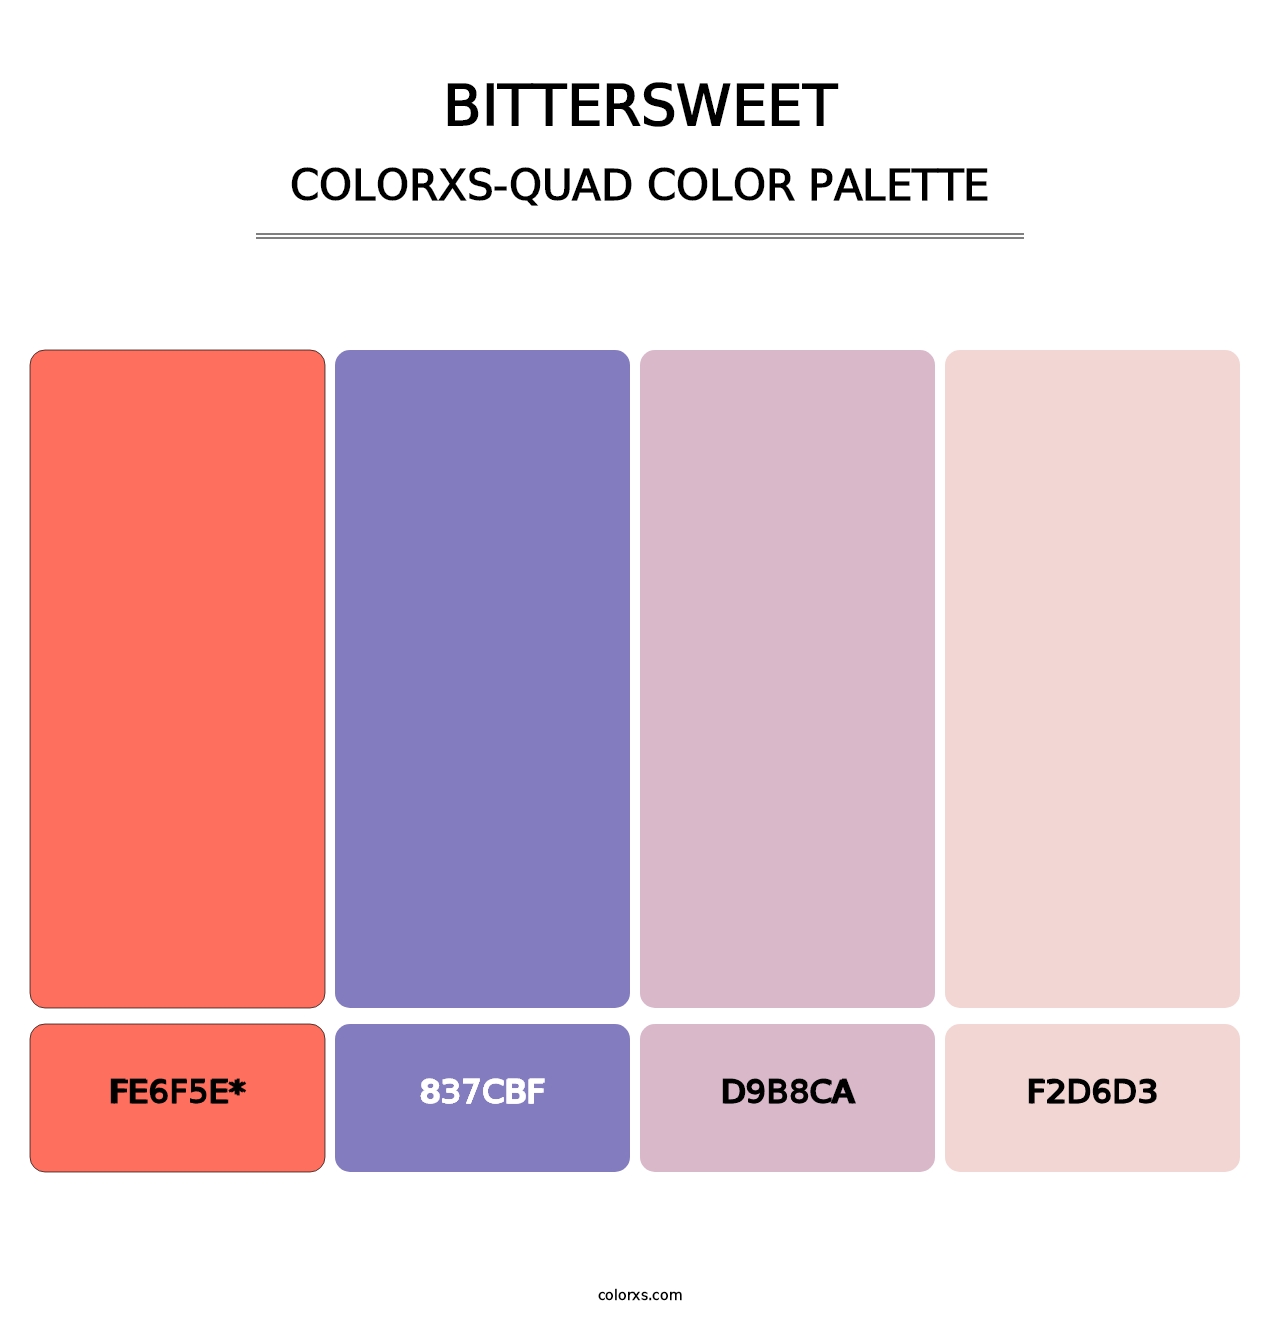 Bittersweet - Colorxs Quad Palette